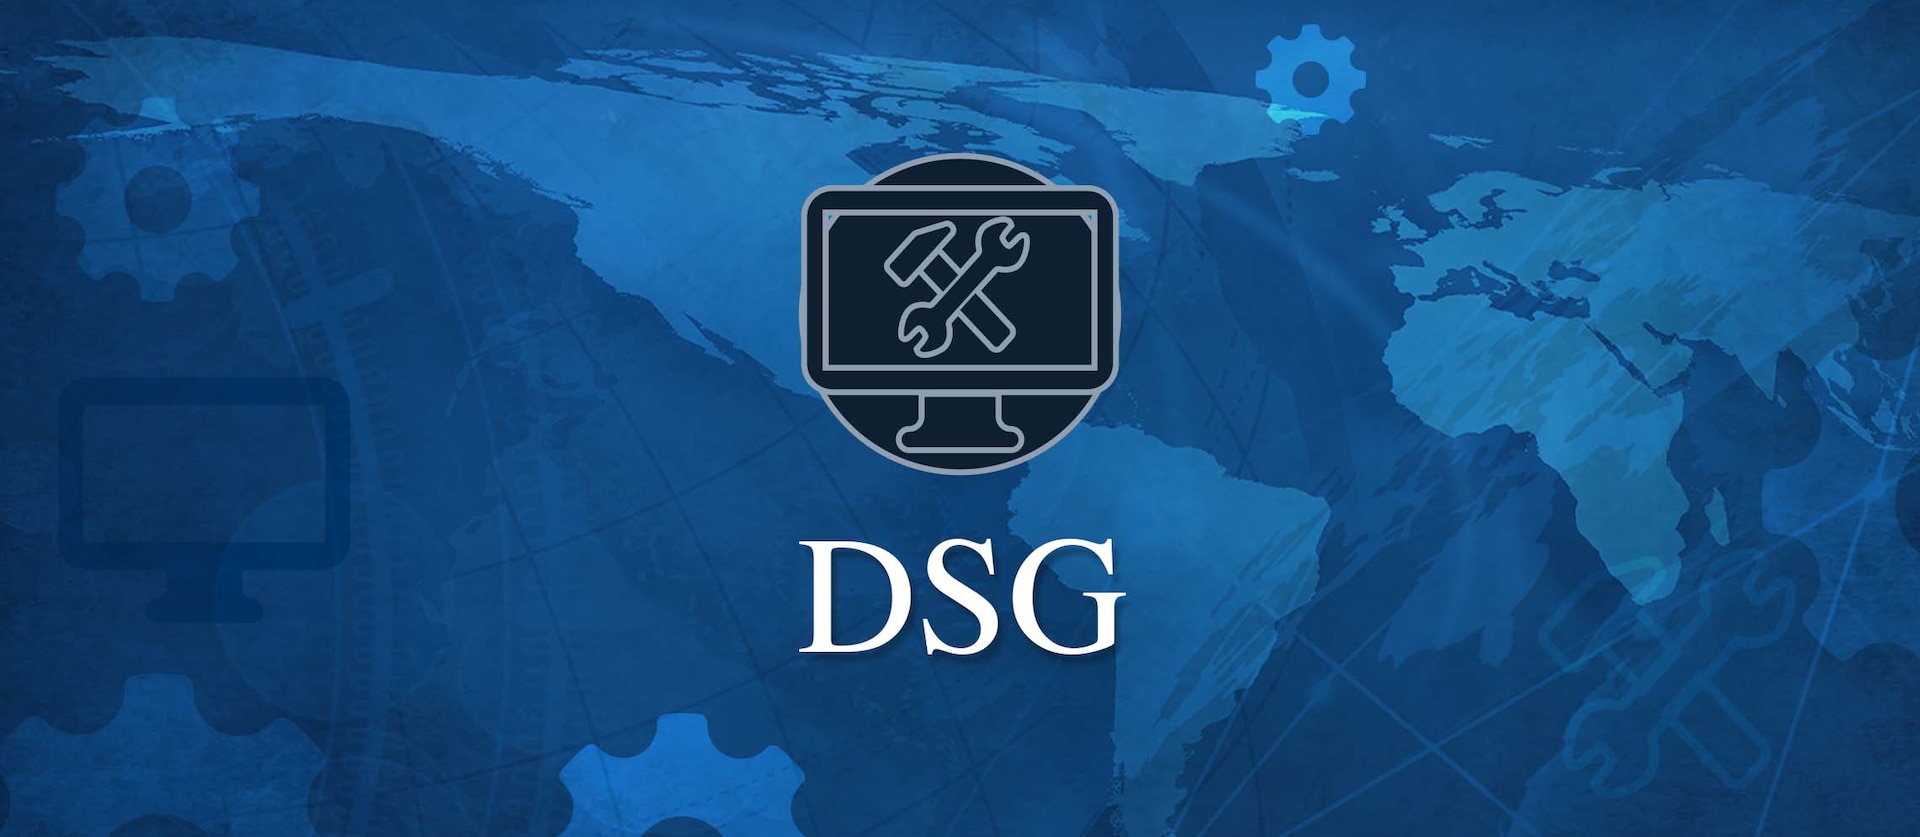 Banner graphic for DSG application